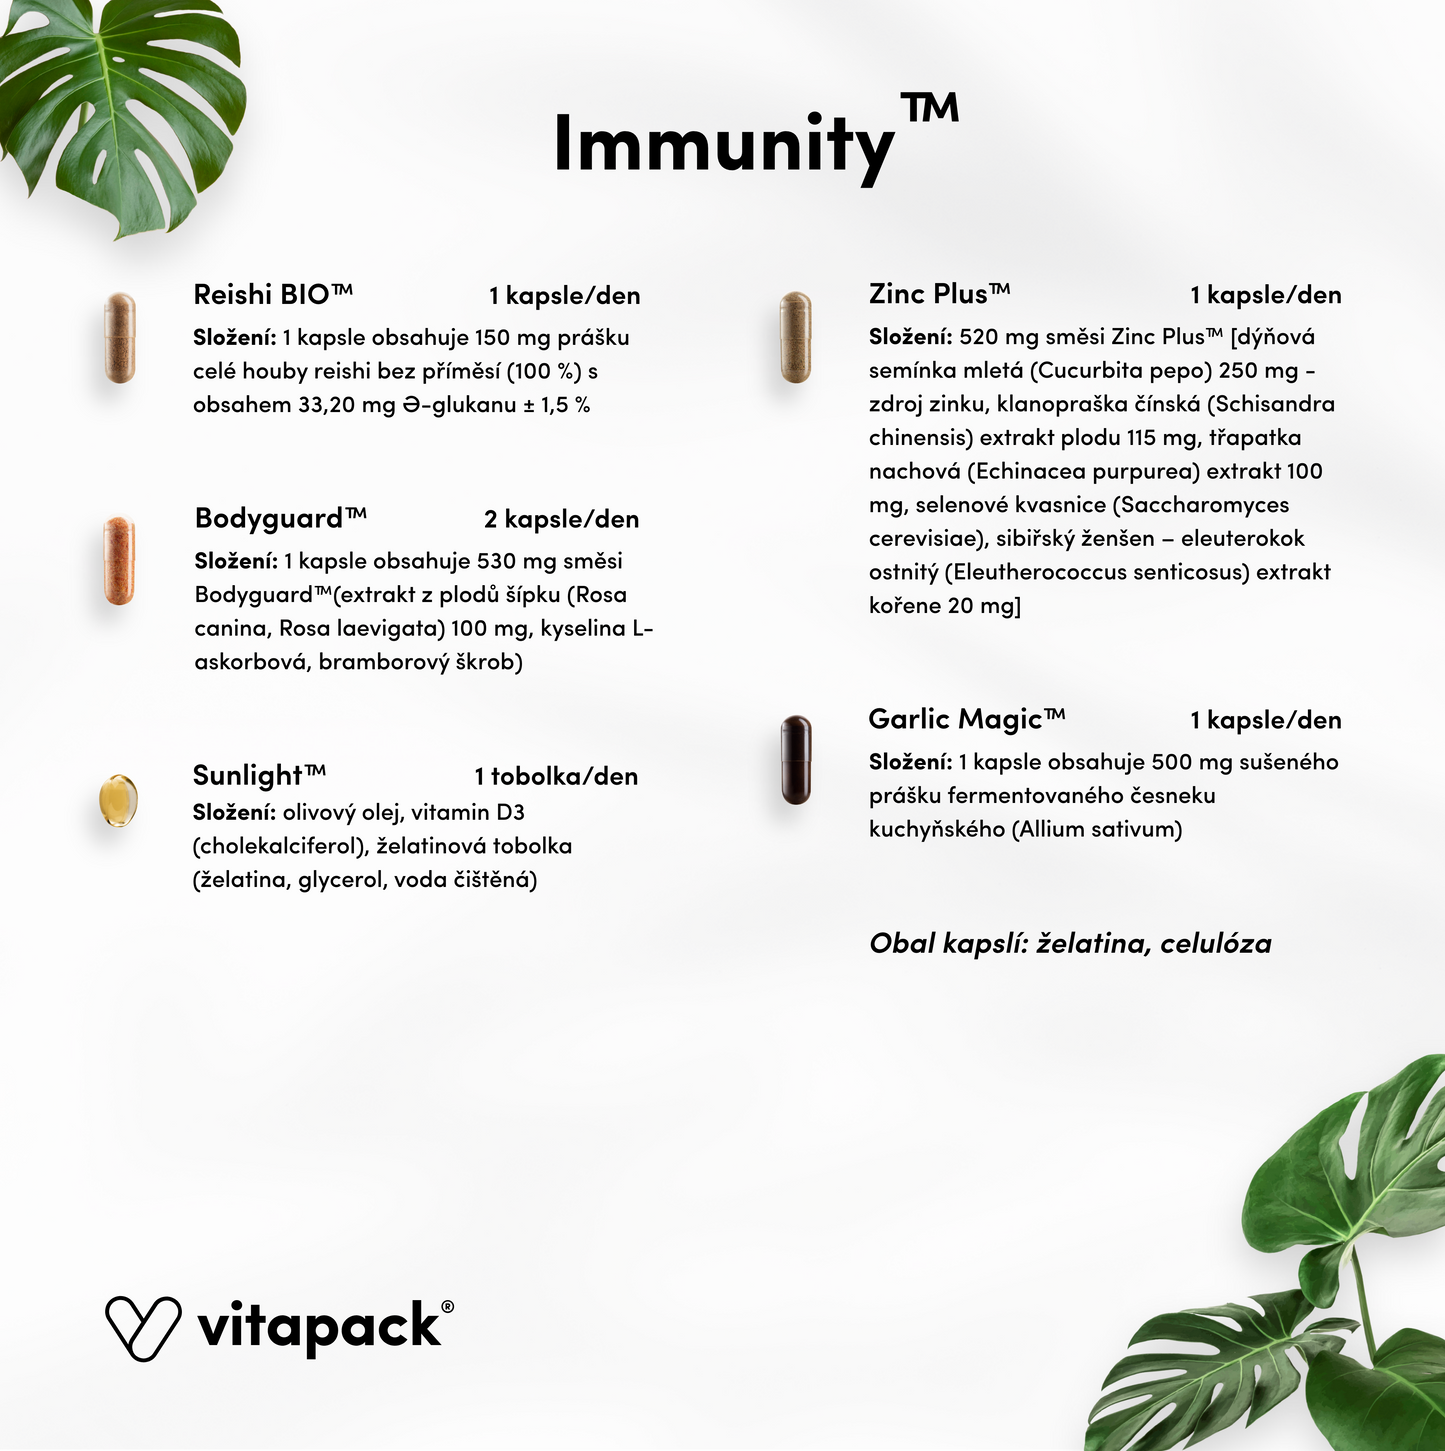 Immunity™